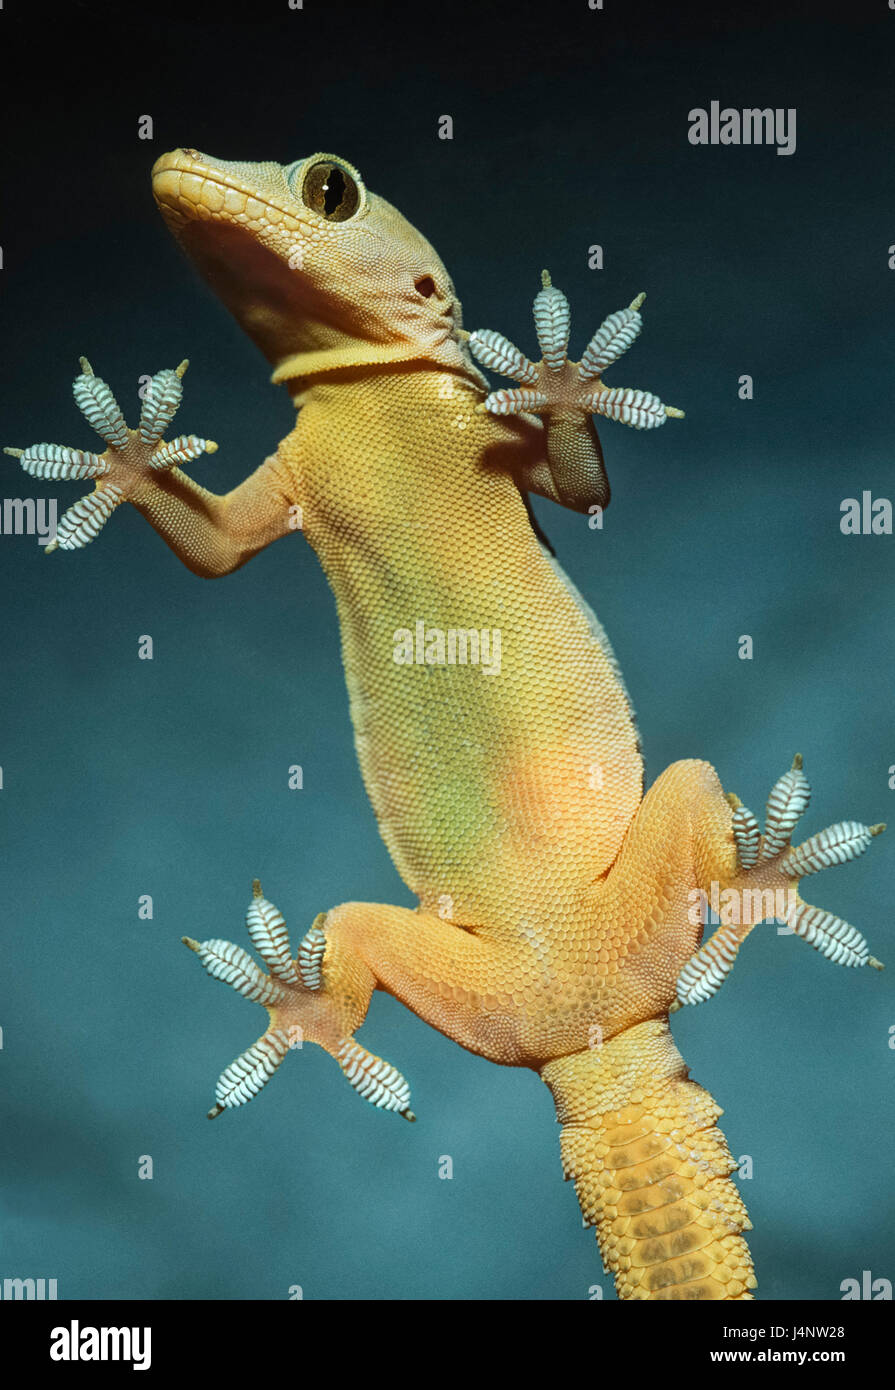 House Gecko, Hemidactylus frenatus, climbing up a glass window pane, Bharatpur, Rajasthan, India Stock Photo